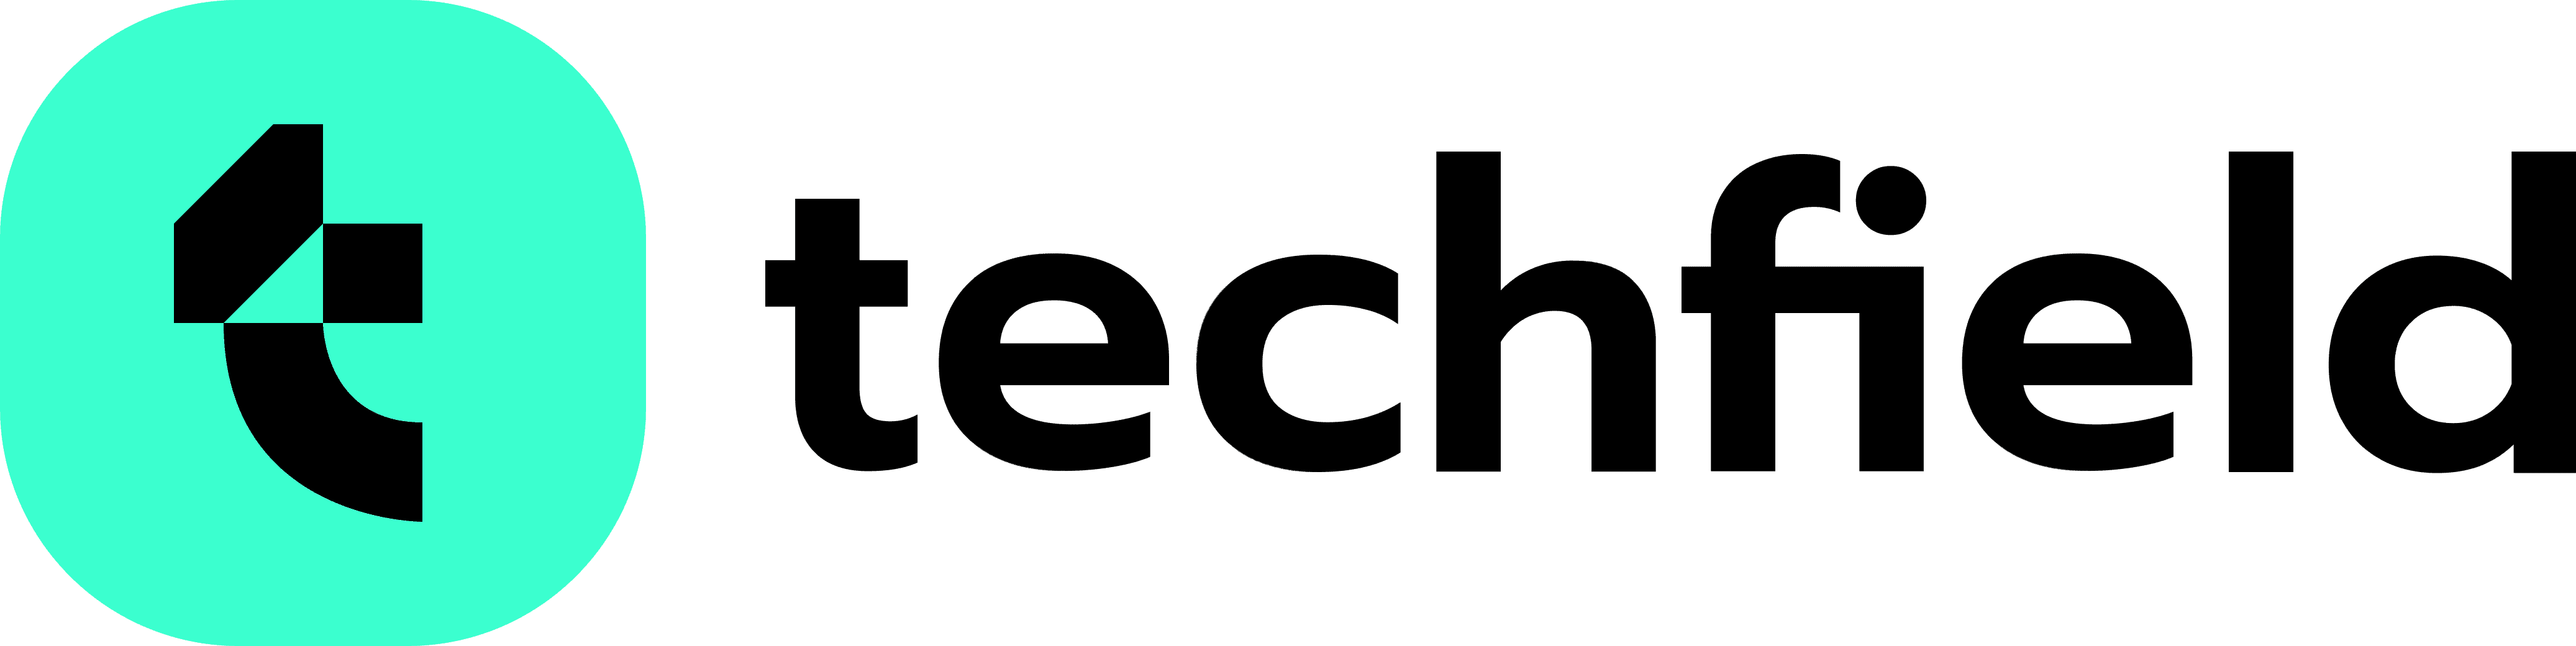 Techfield 2.0 nieuwe logo